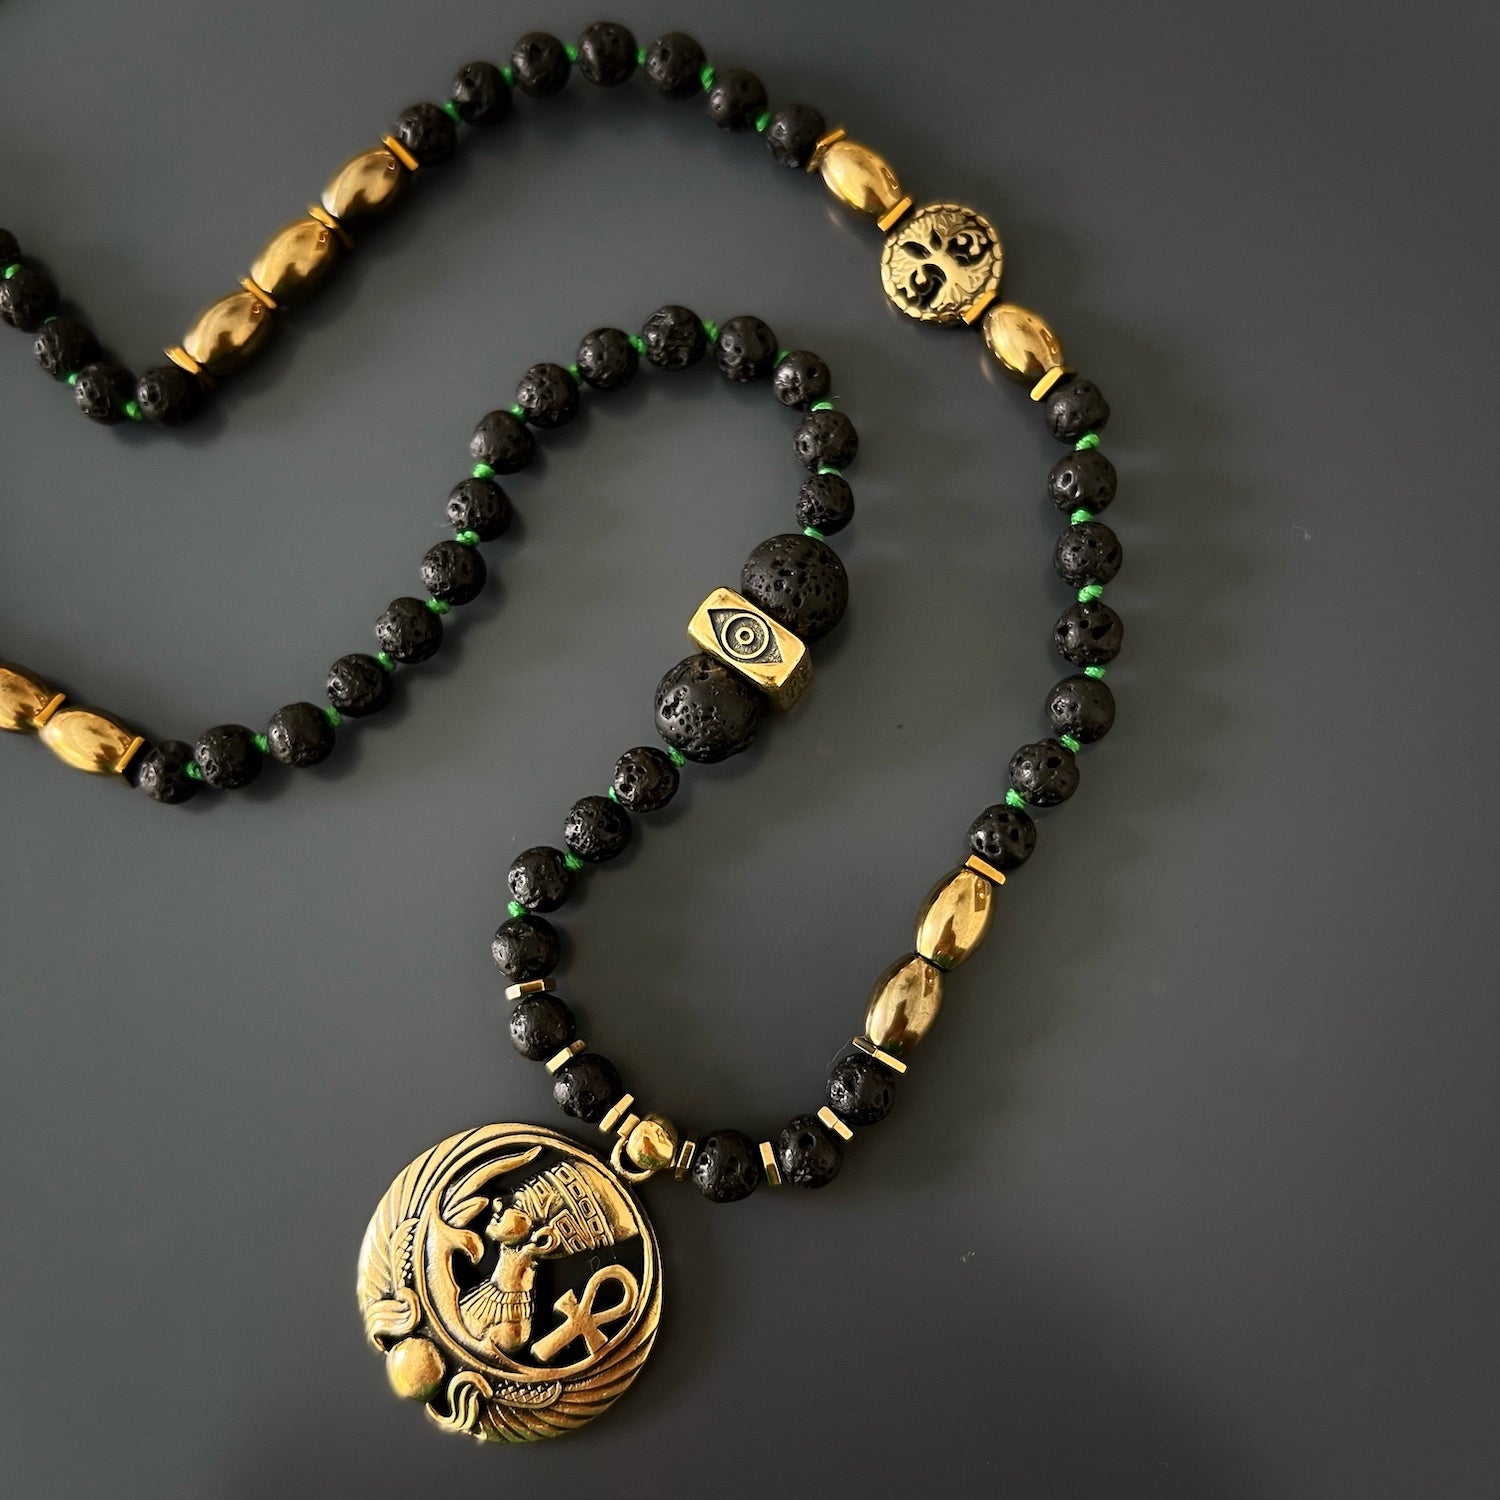 Stylish and Talismanic Black Lava Rock Stone Necklace with Nepal Mantra Beads